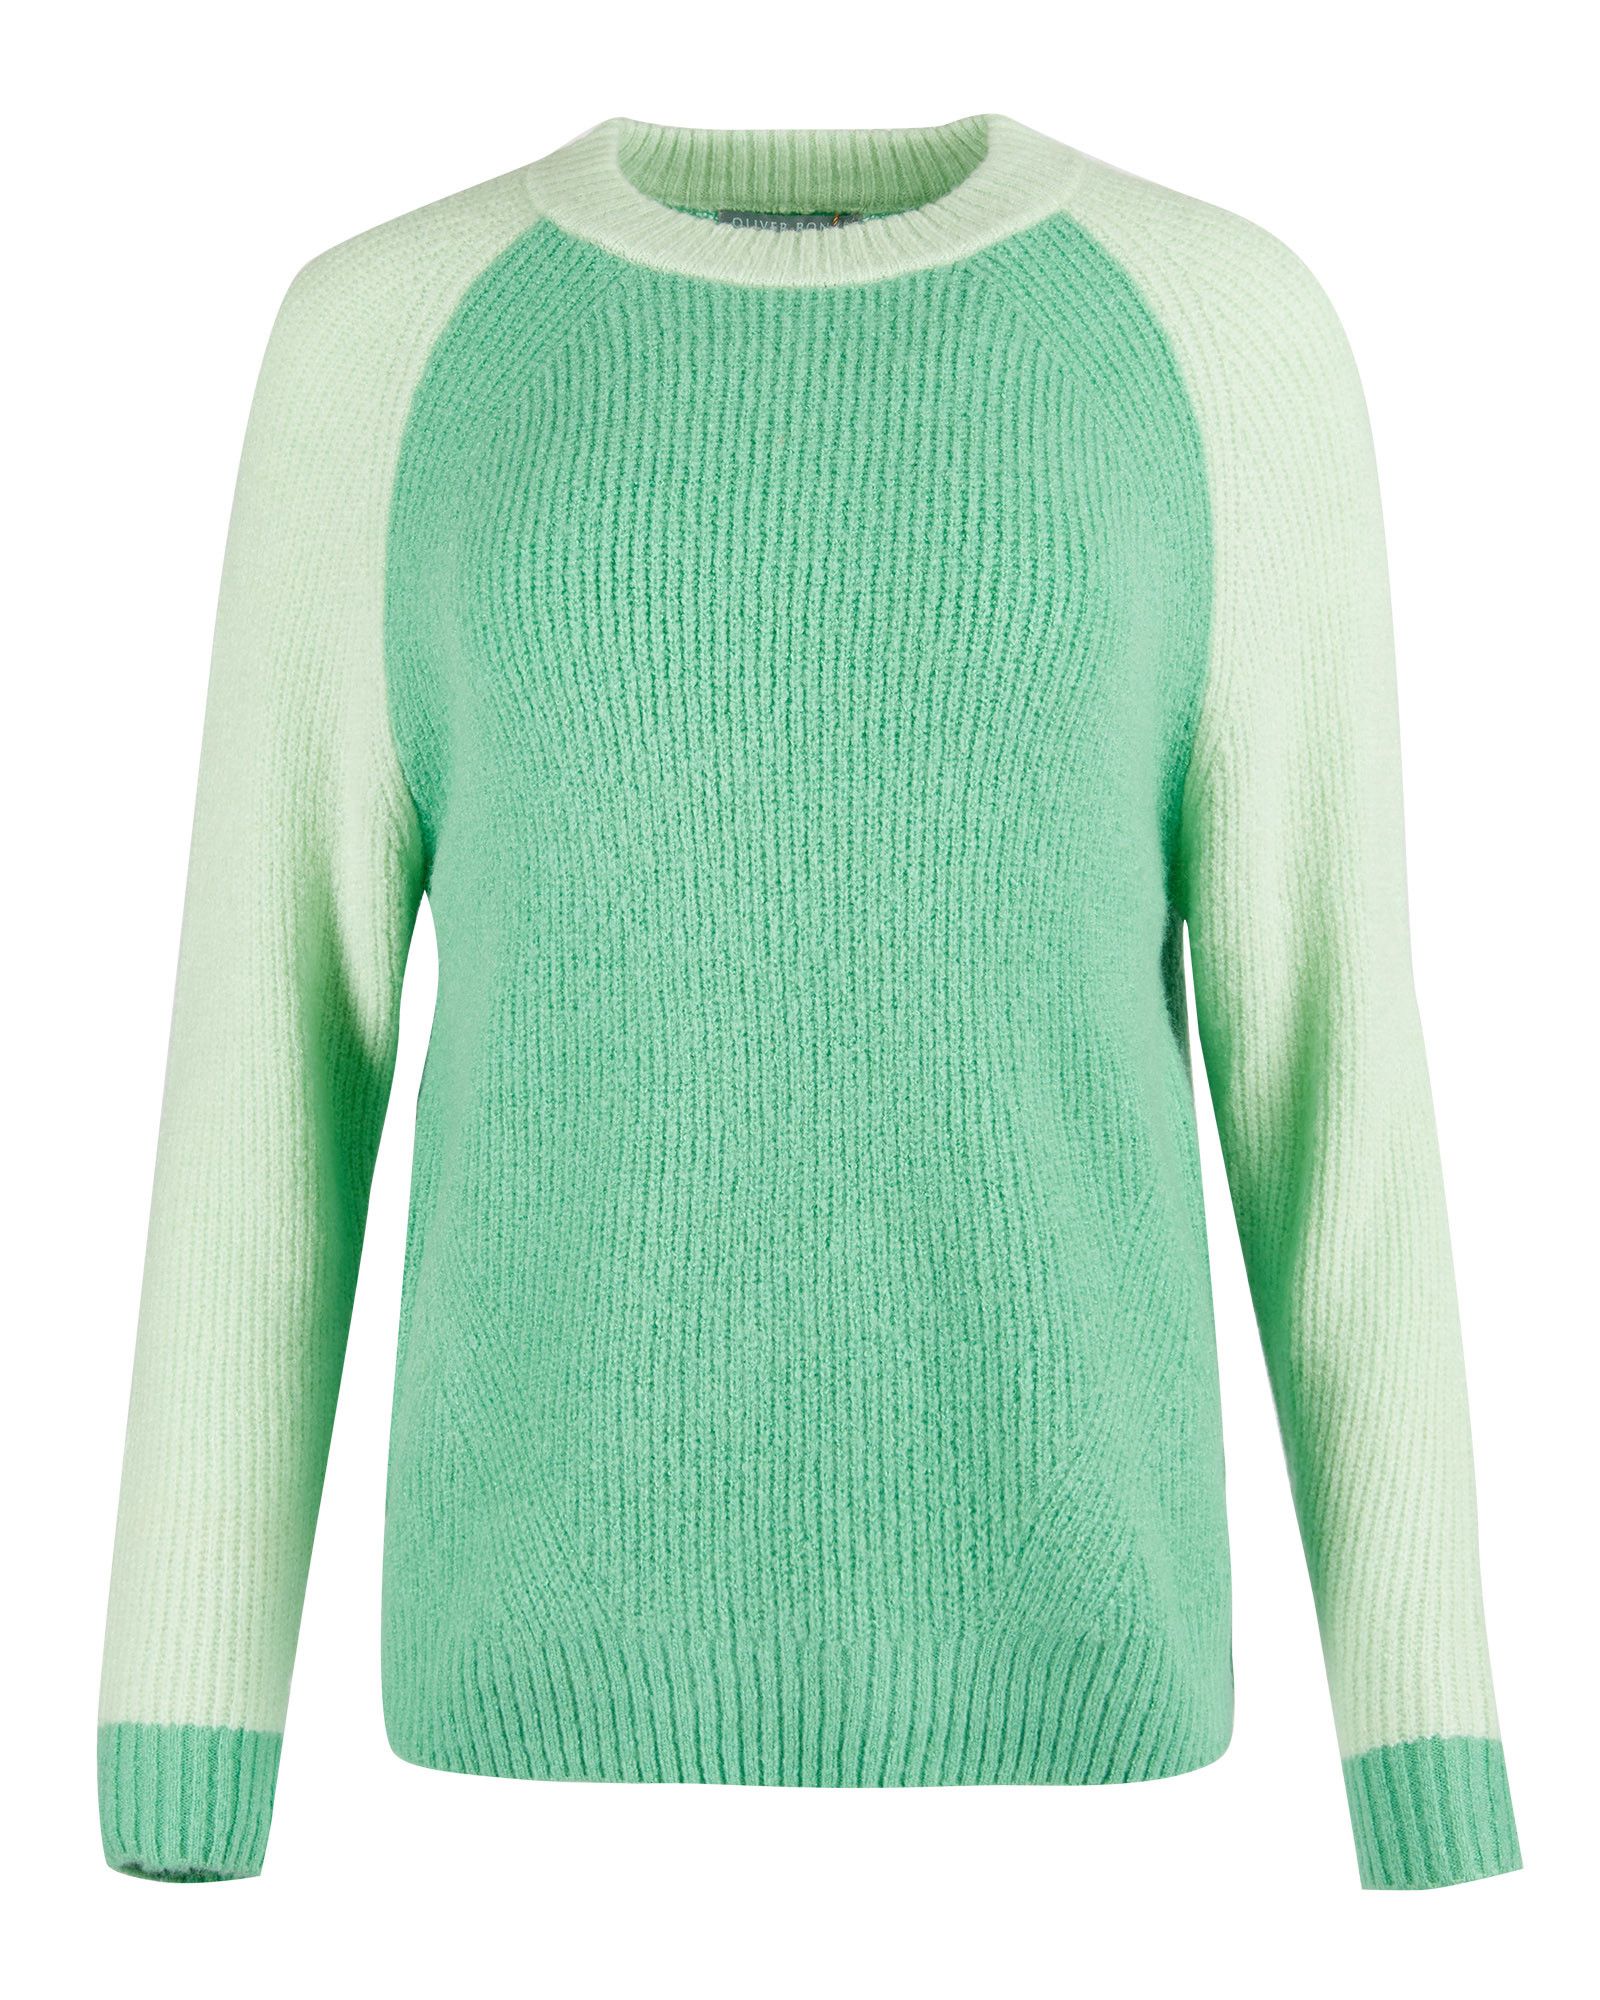 Contrast Sleeve Green Knitted Jumper | Oliver Bonas